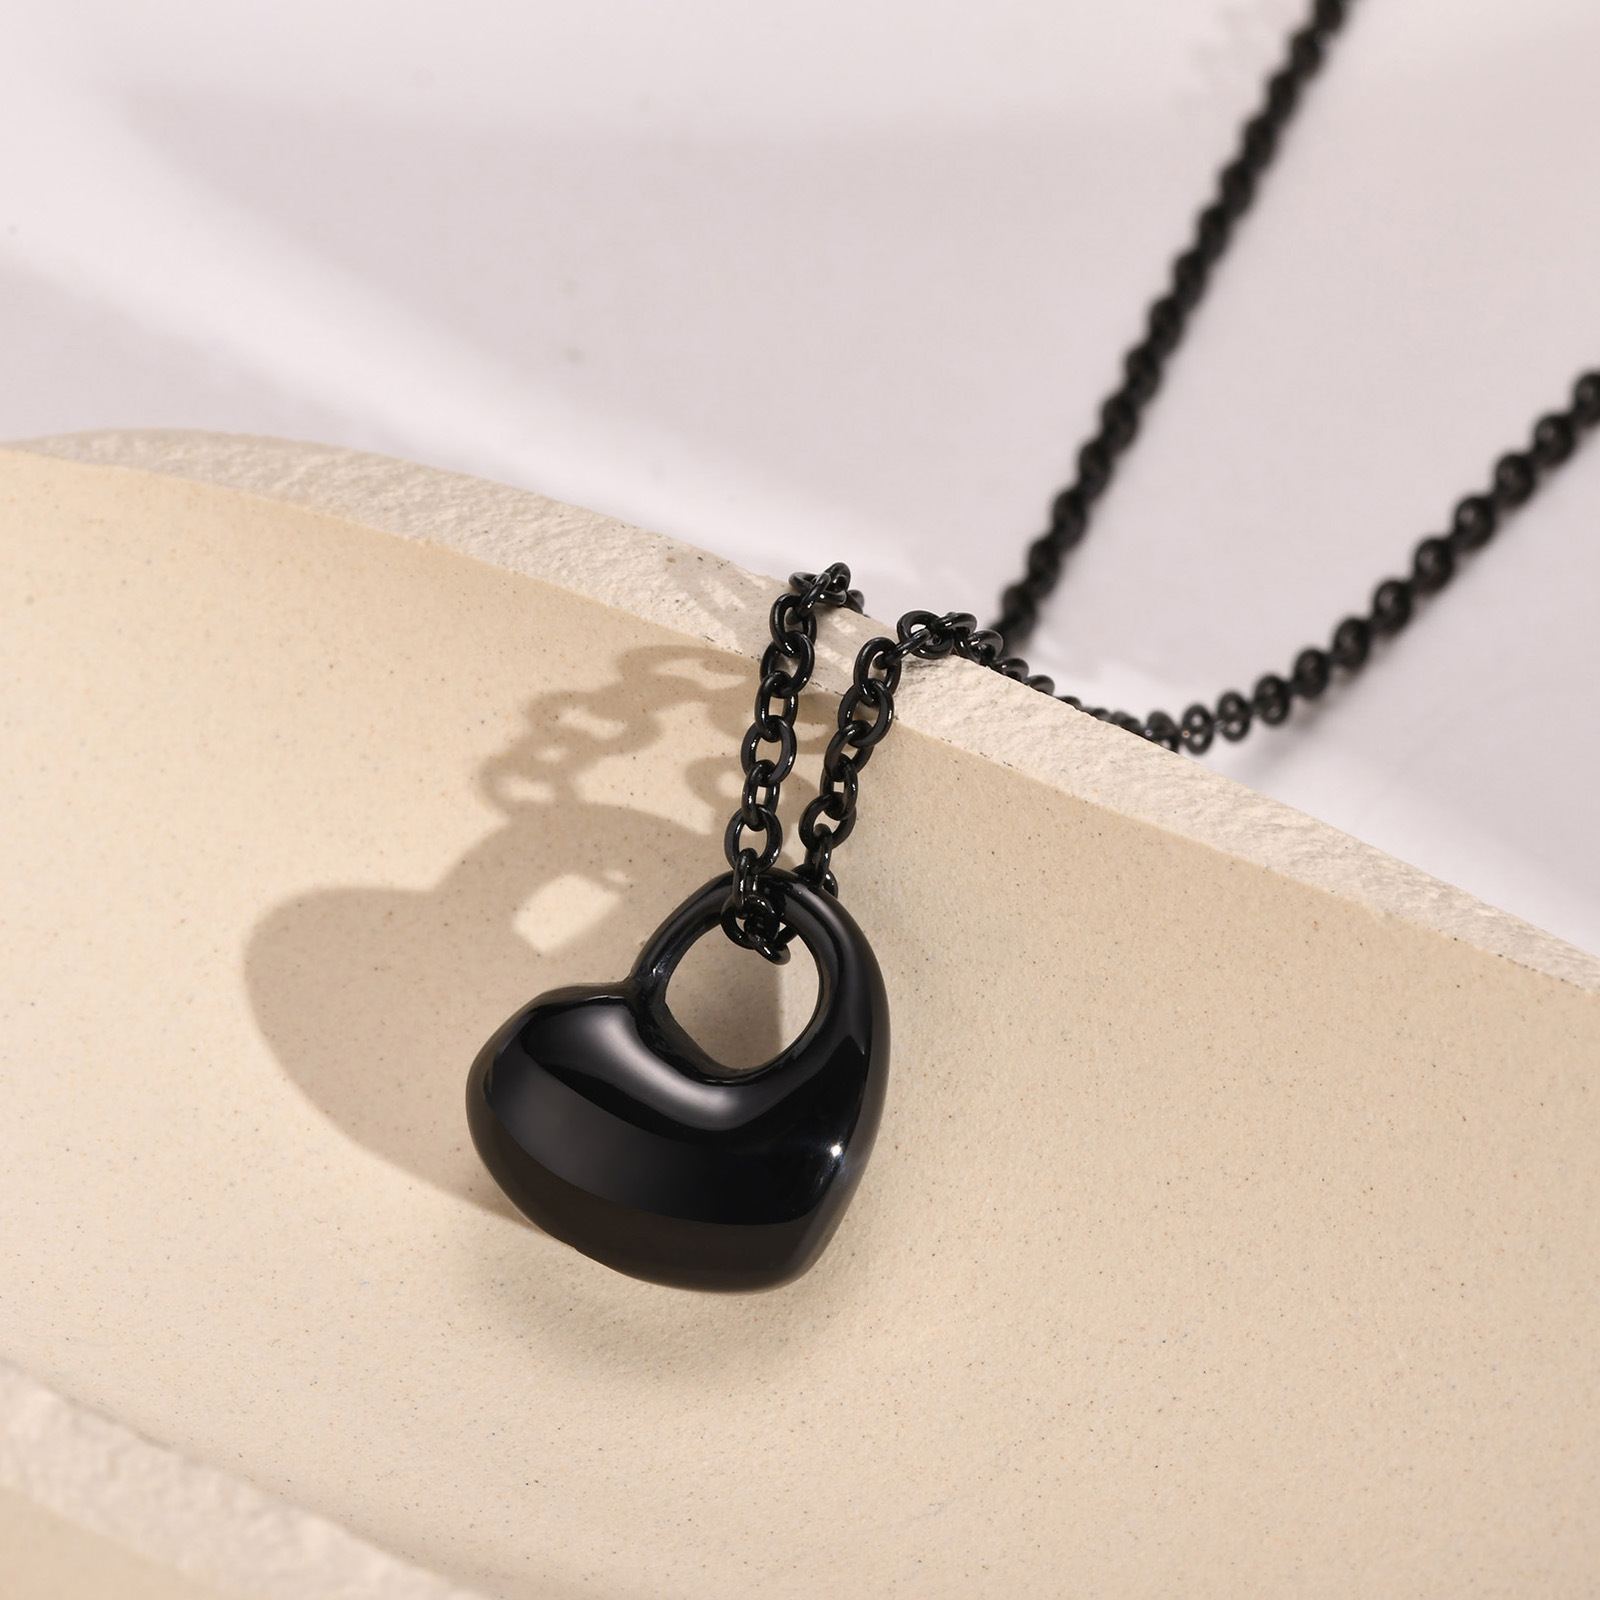 1:black pendant